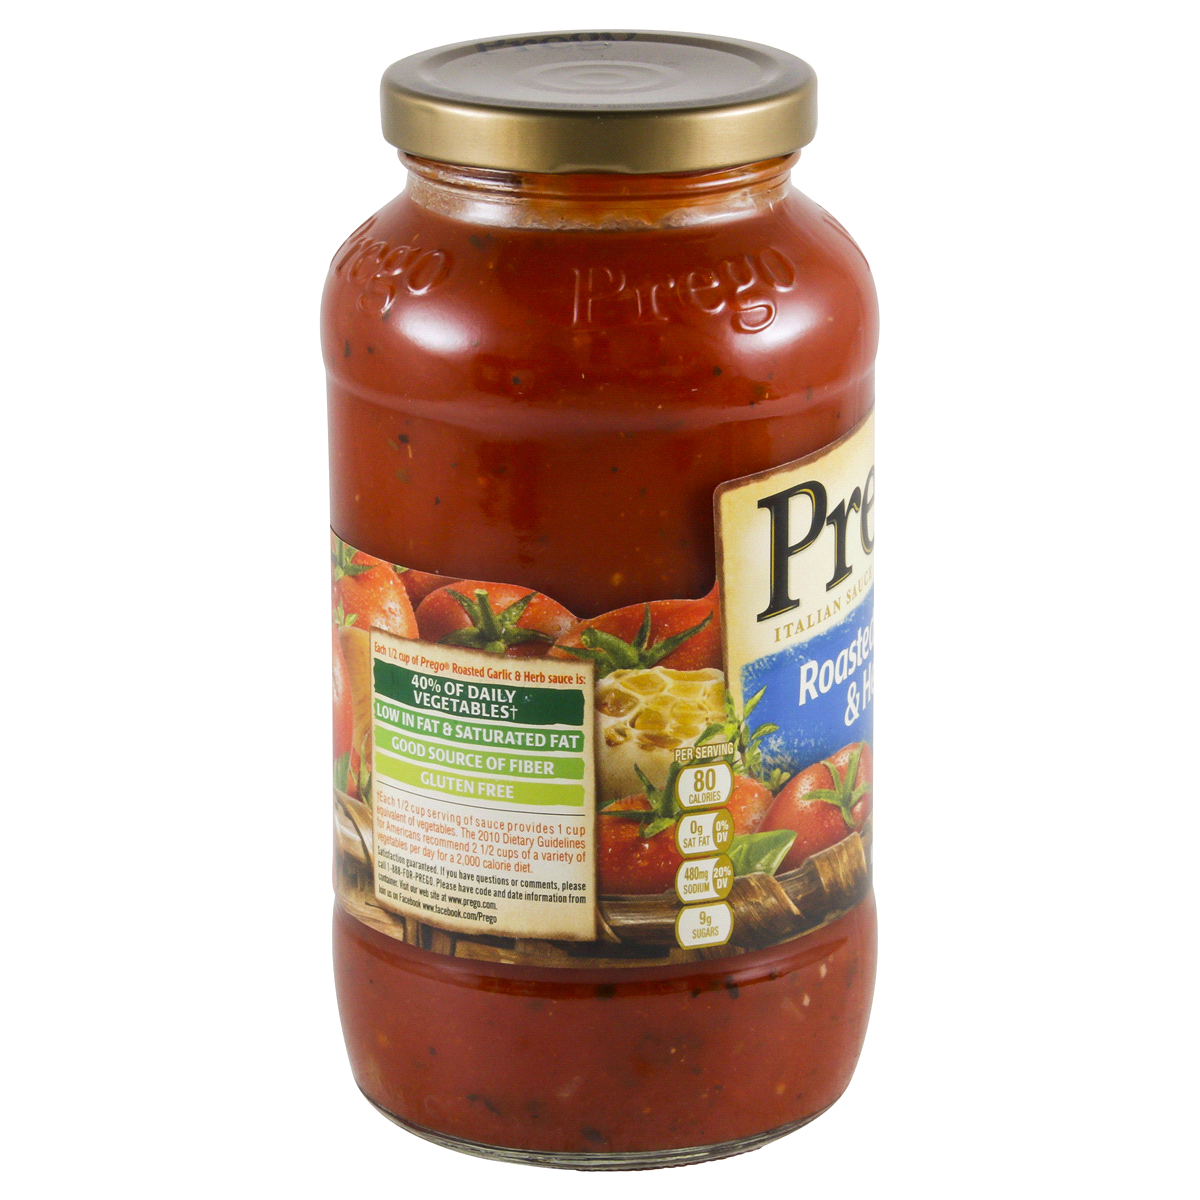 slide 9 of 90, Prego Roasted Garlic & Herb Italian Sauce, 24 oz